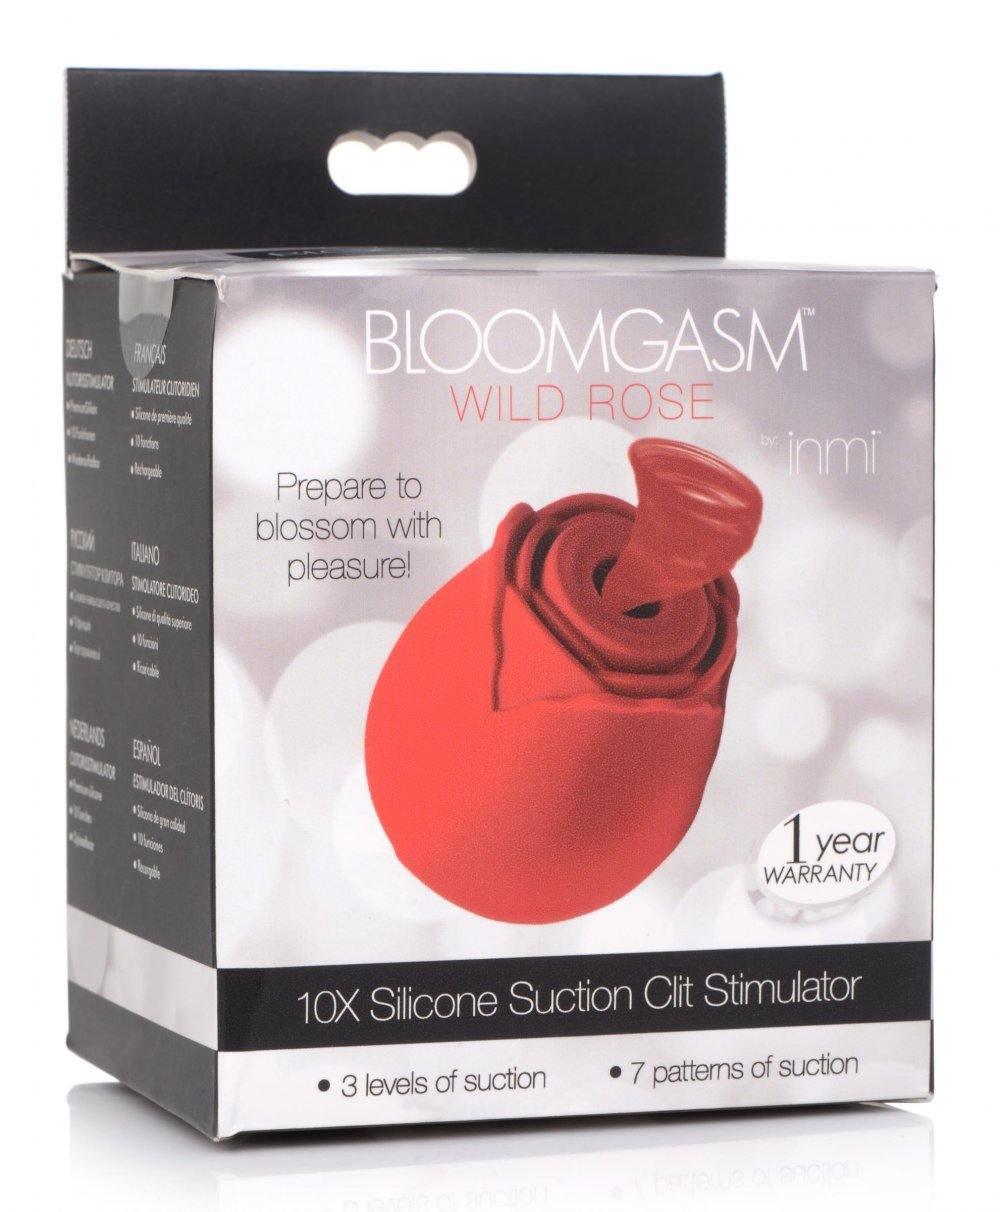 Bloomgasm Wild Rose 10X Silicone Clit Stimulator - My Sex Toy Hub